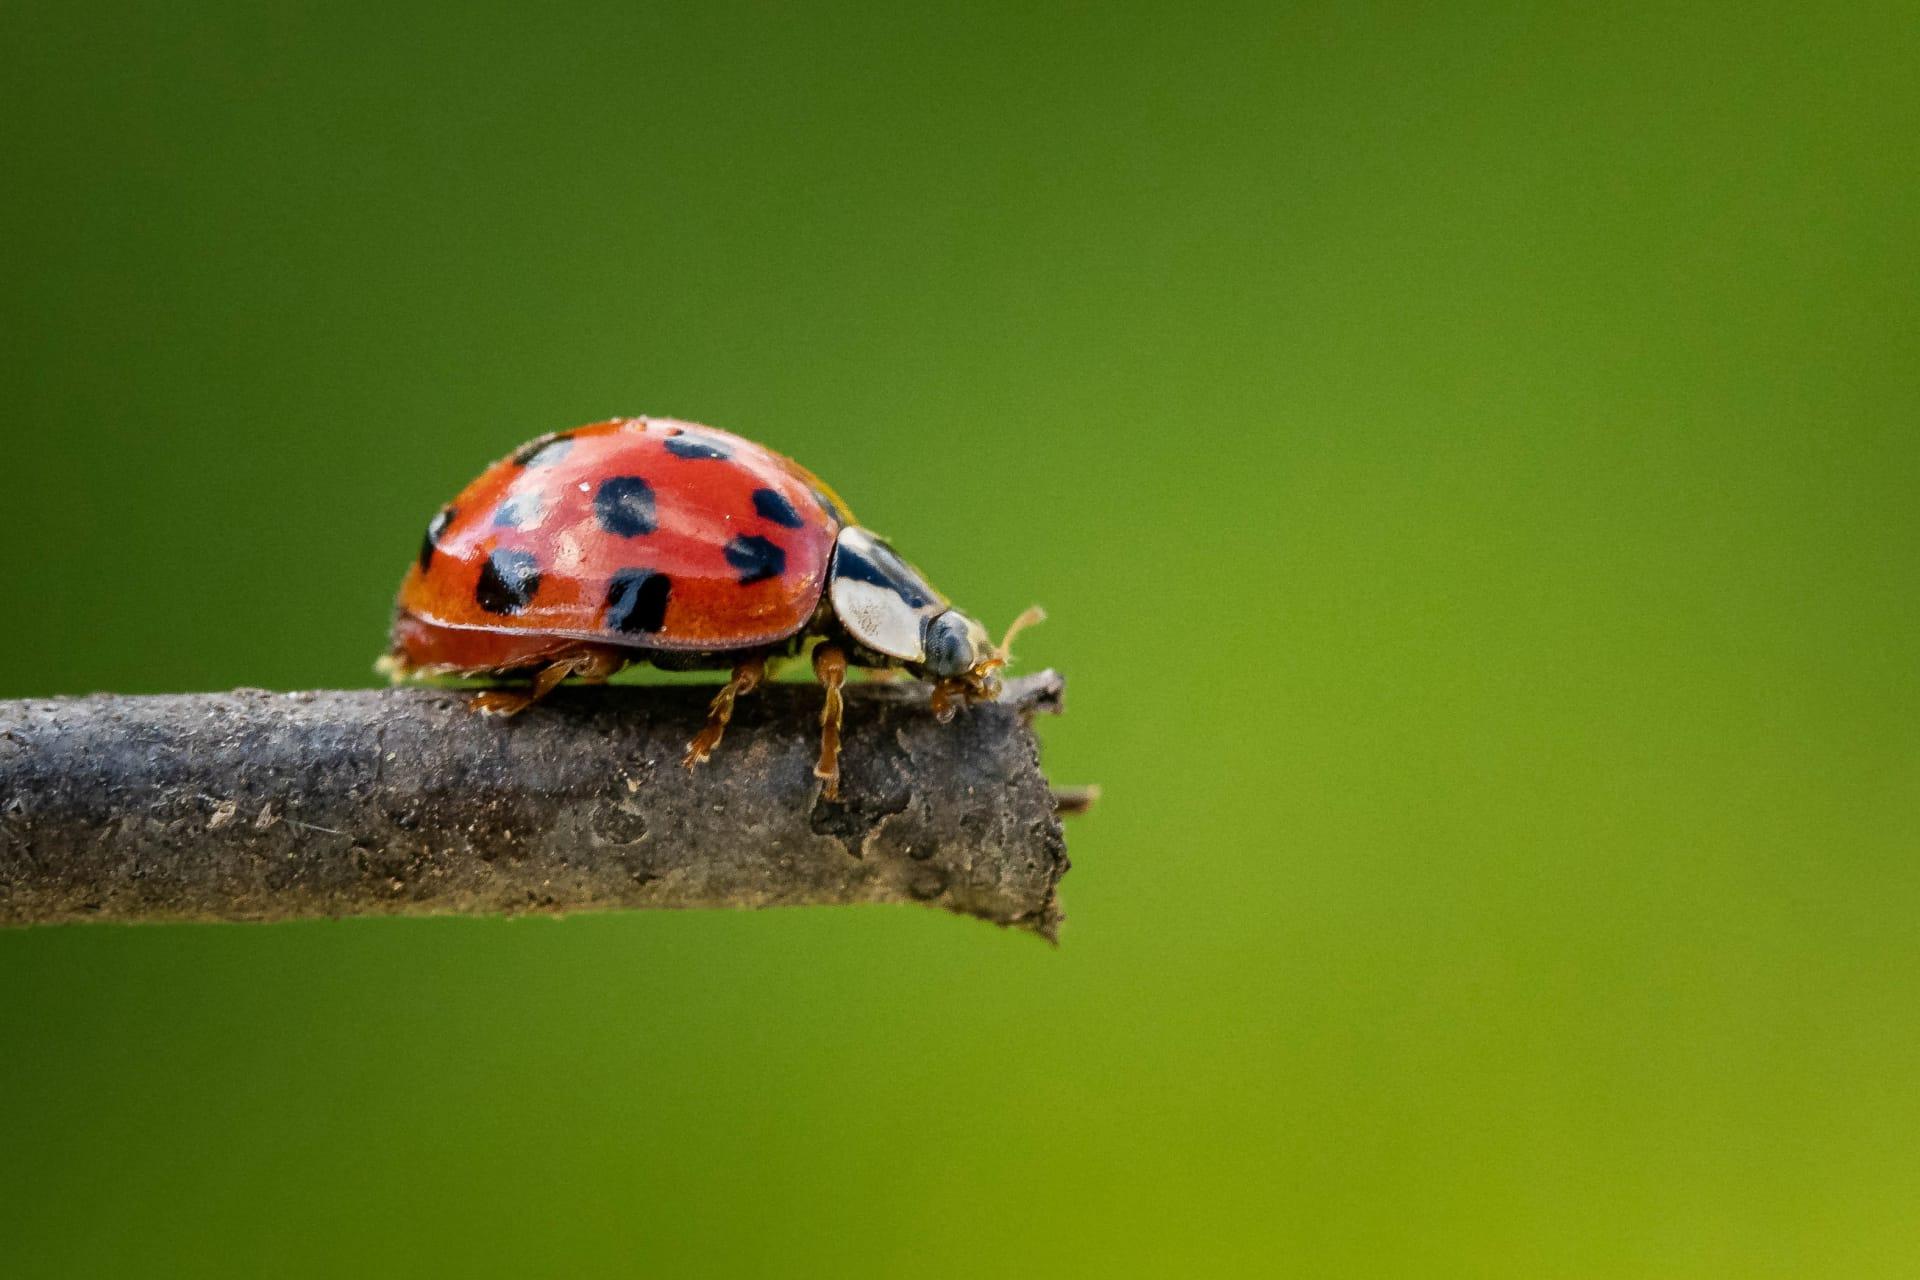 Ladybug pictures